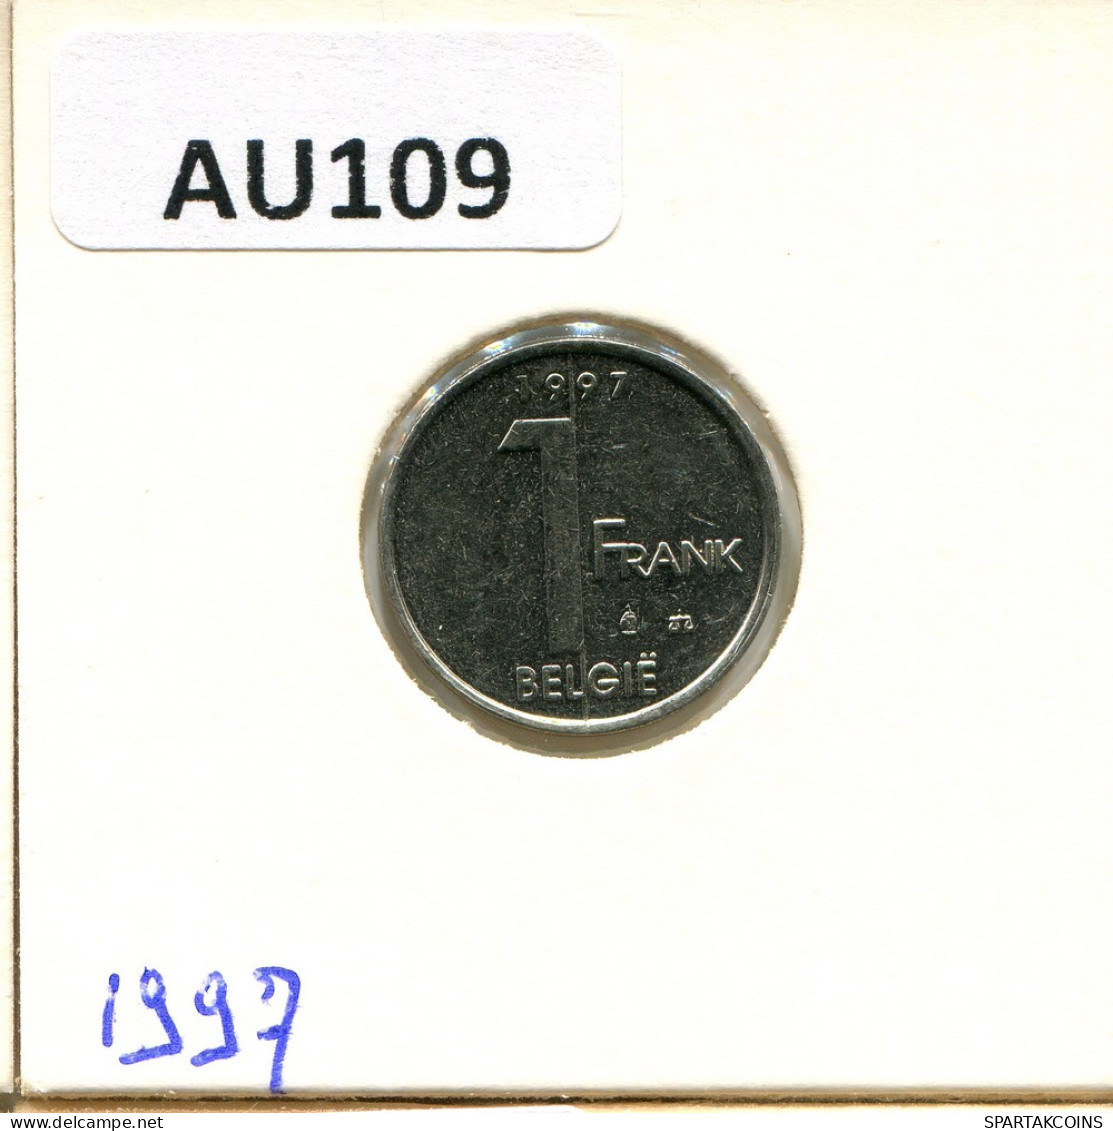 1 FRANC 1997 DUTCH Text BELGIUM Coin #AU109.U - 1 Frank